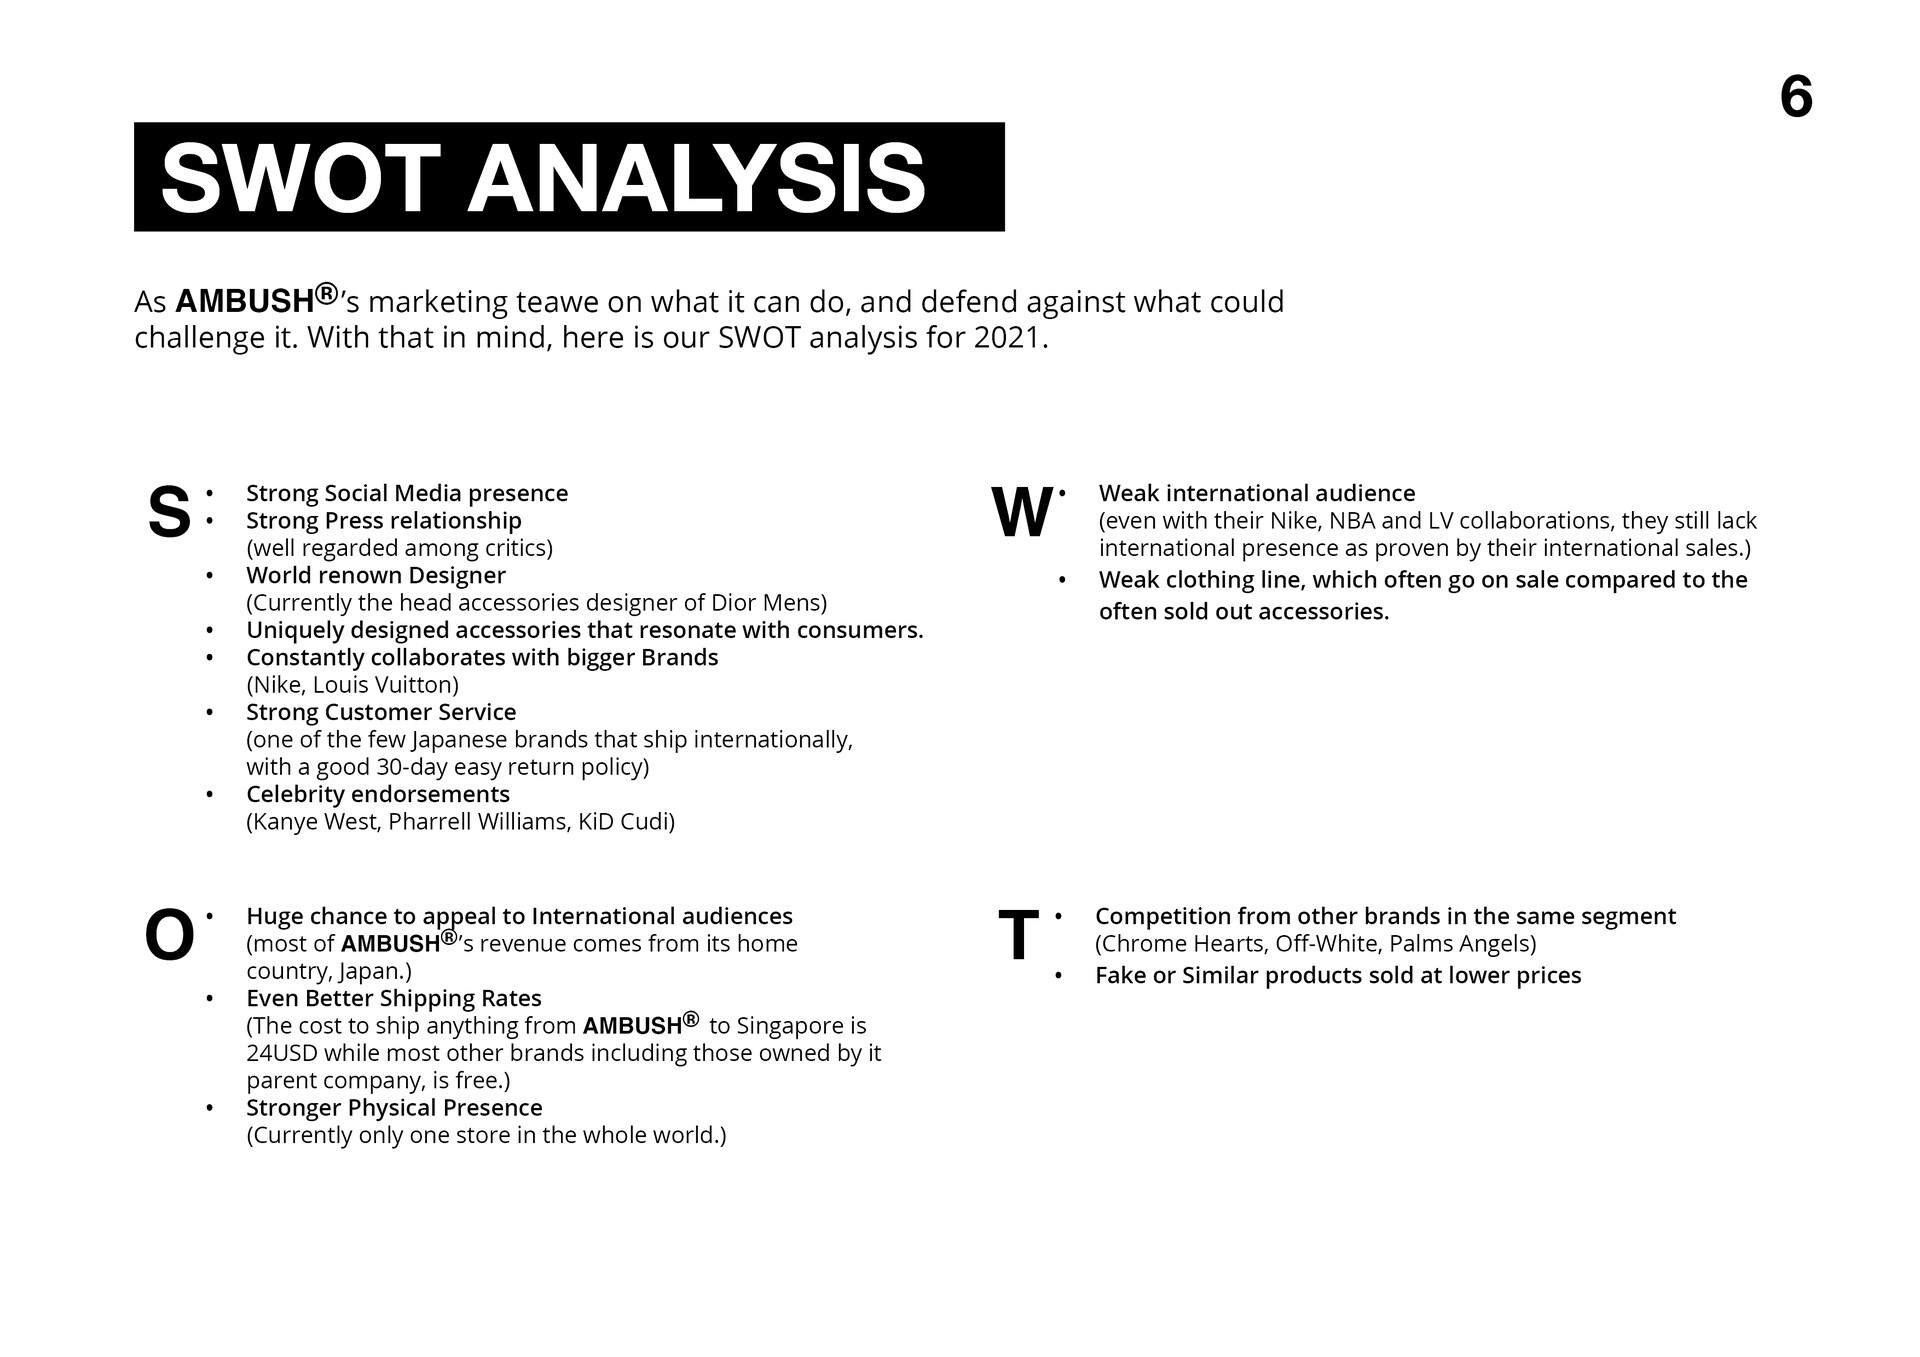 Dior SWOT Analysis [classic]